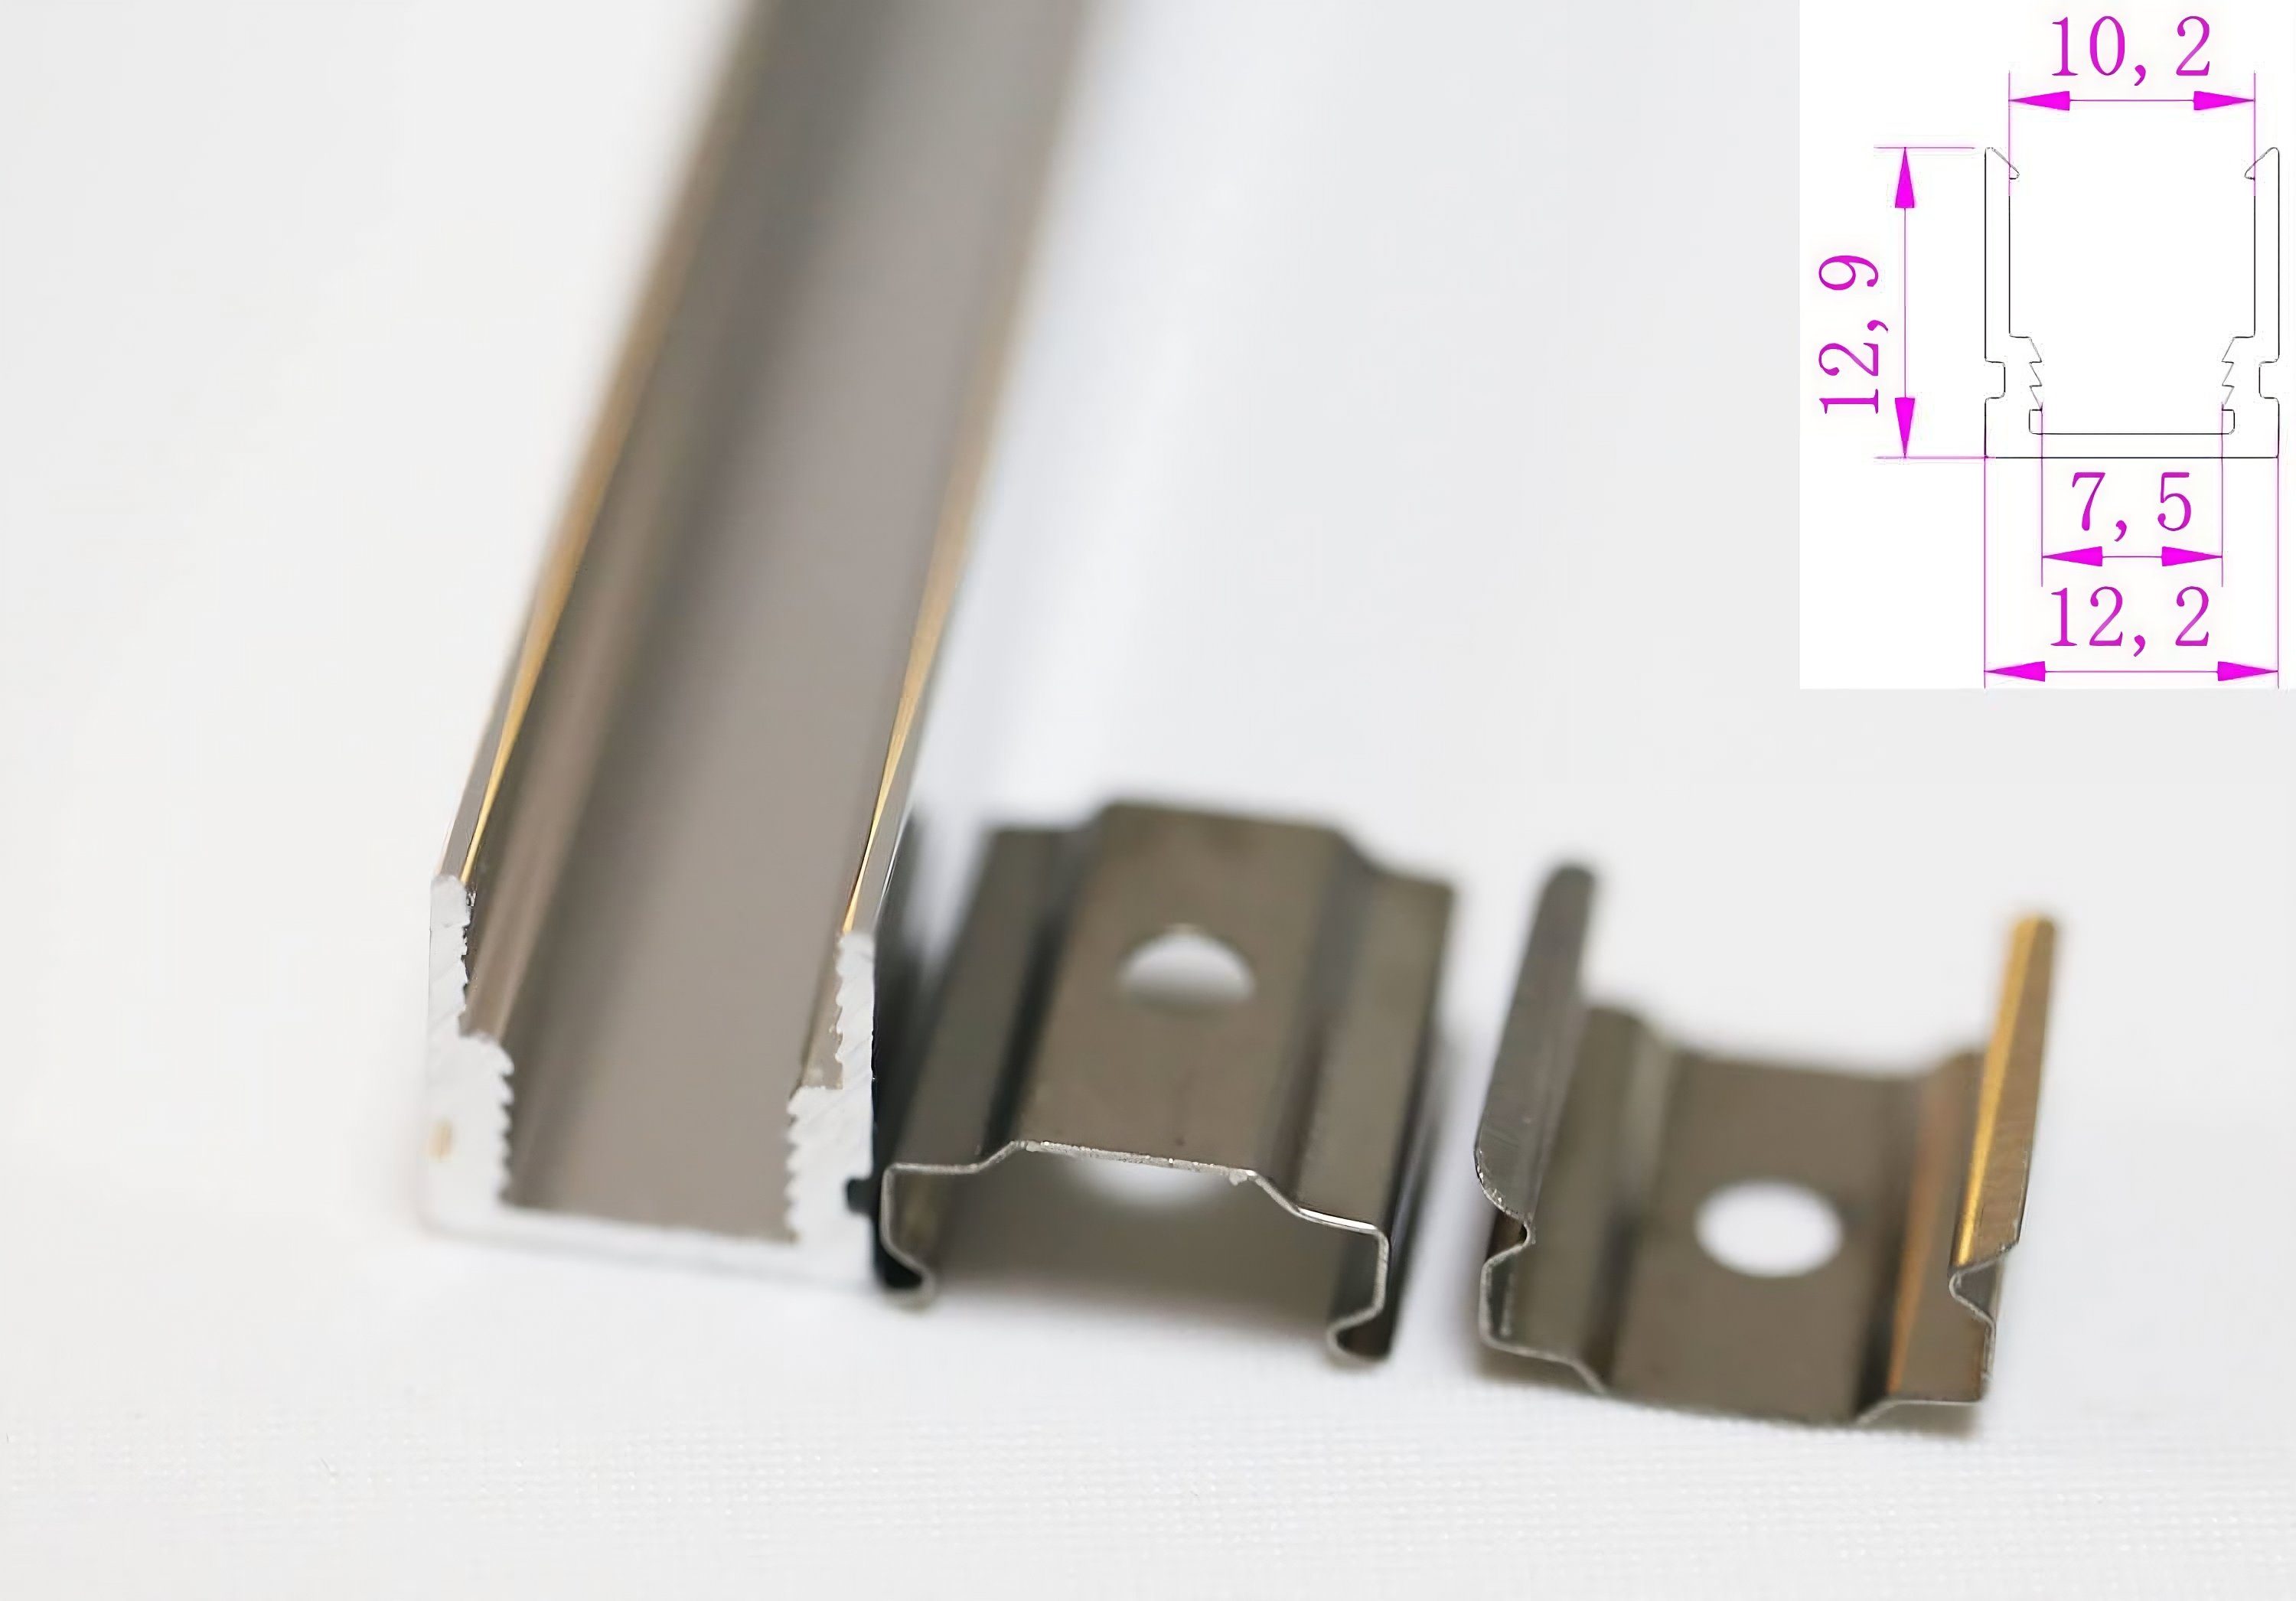 STRIPS U8 ALUMINIUM MIT LED-Stripe-Profil FÜR ABDECKUNG PROFIL Ogeled LED